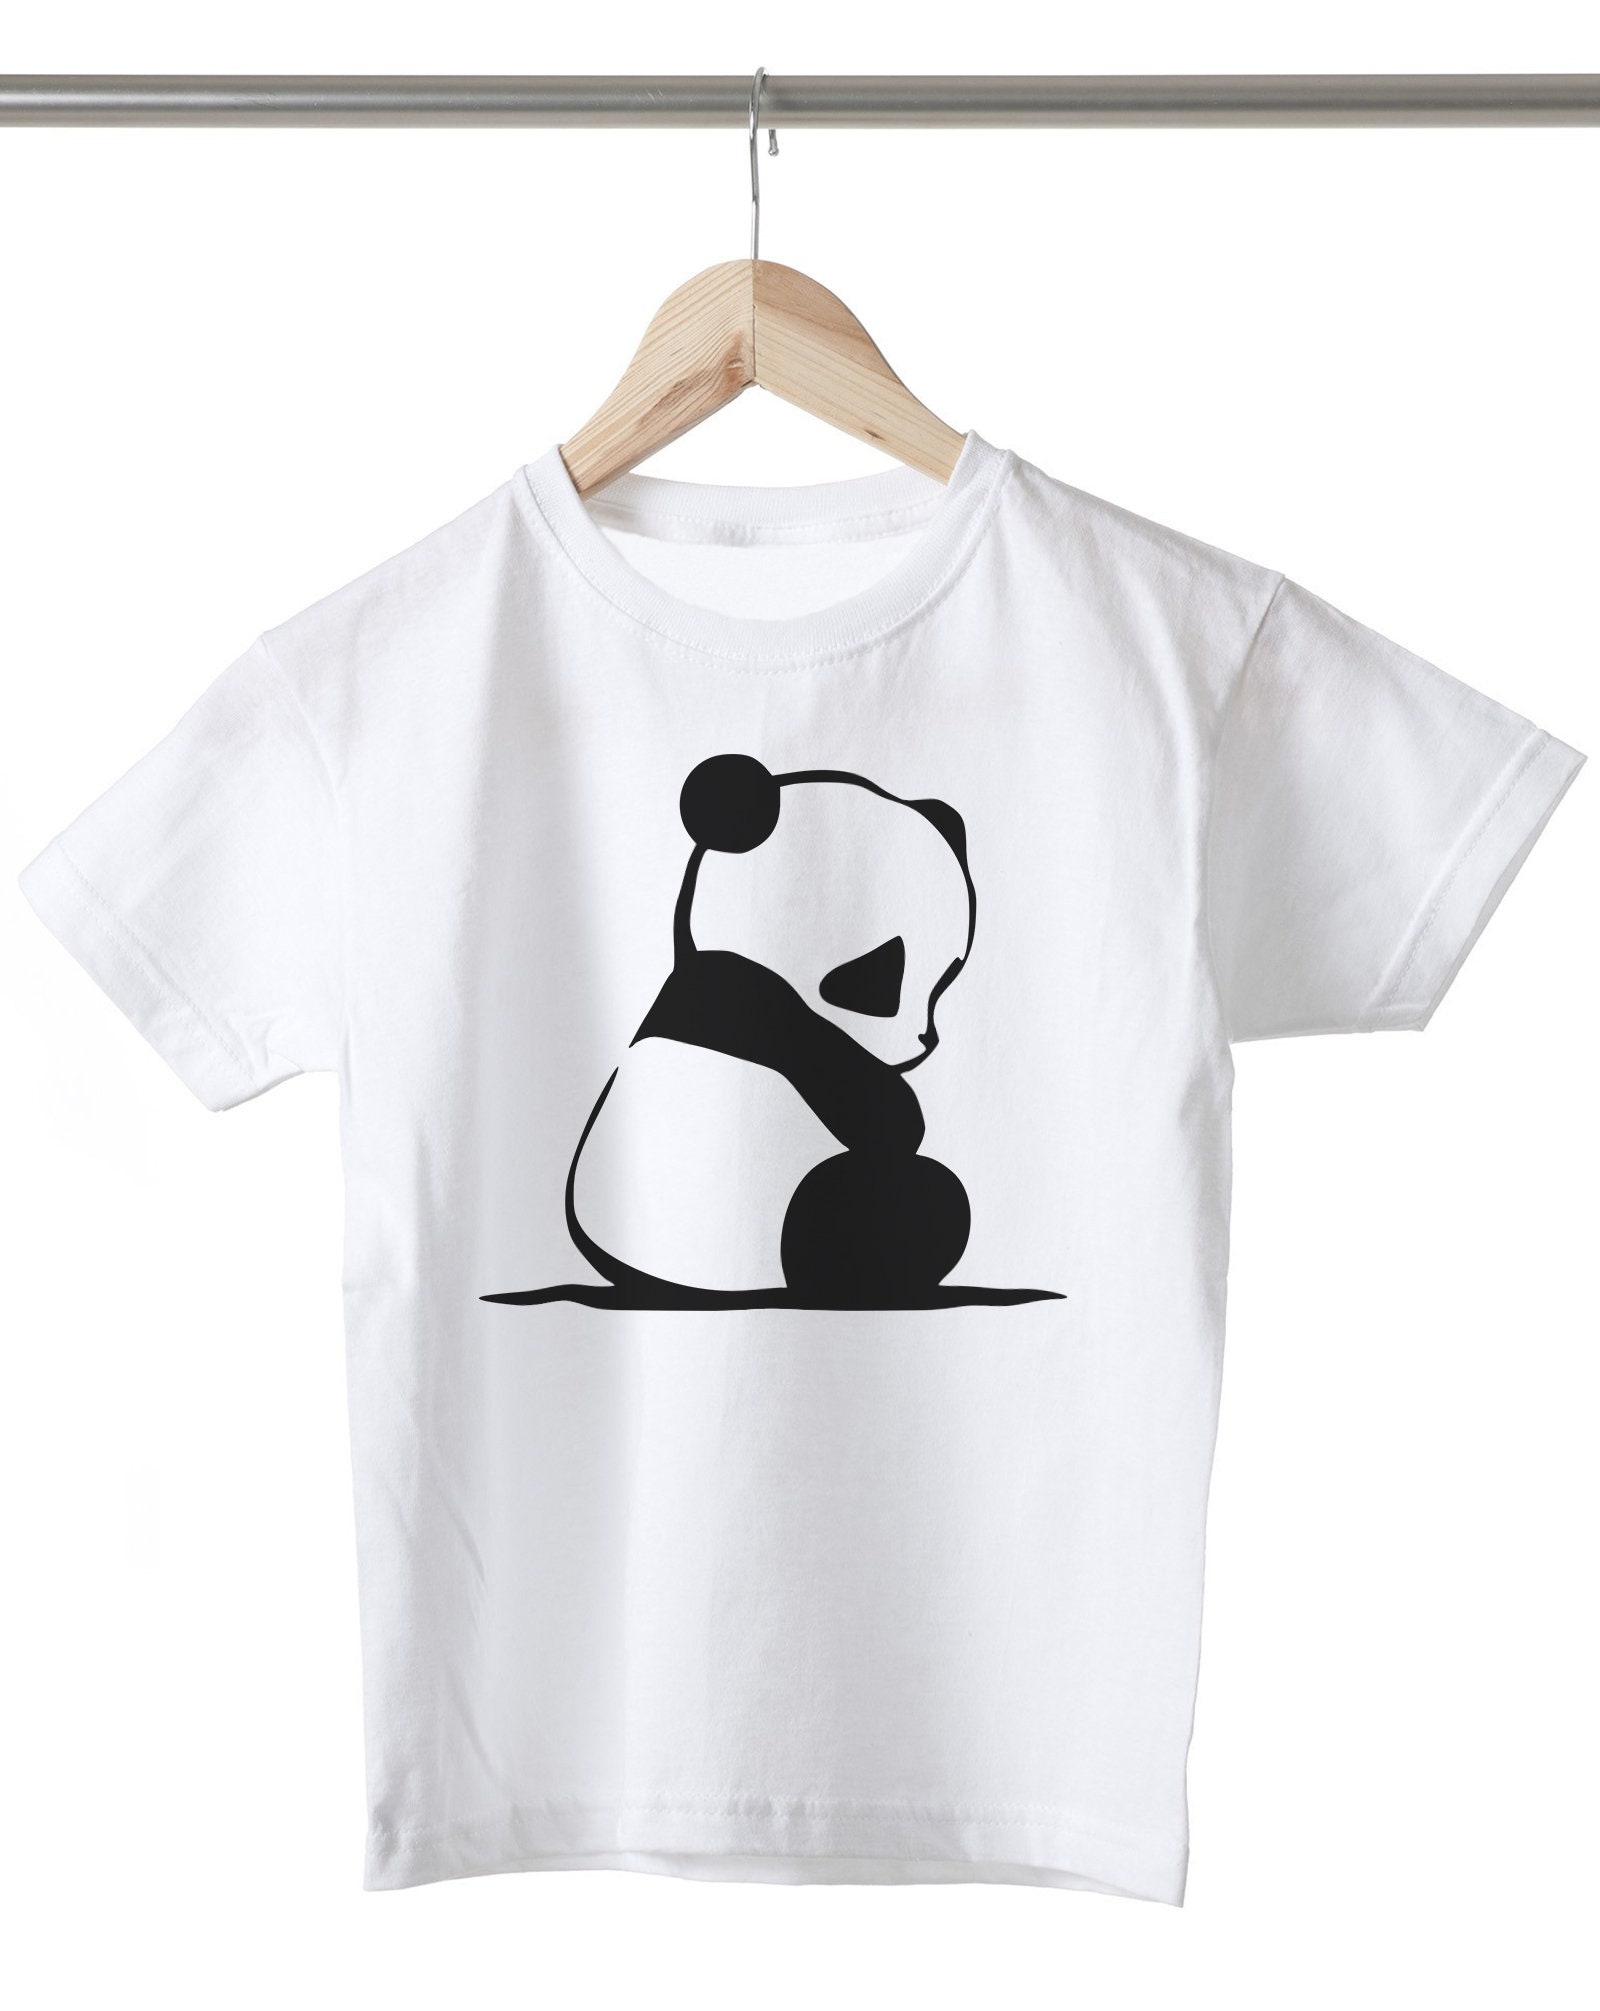 Stencil Panda Cute Animal Nature Cartoon Unisex Kids Girls Boys Cotton  Trendy Printed White T-shirt Top Tee - Etsy